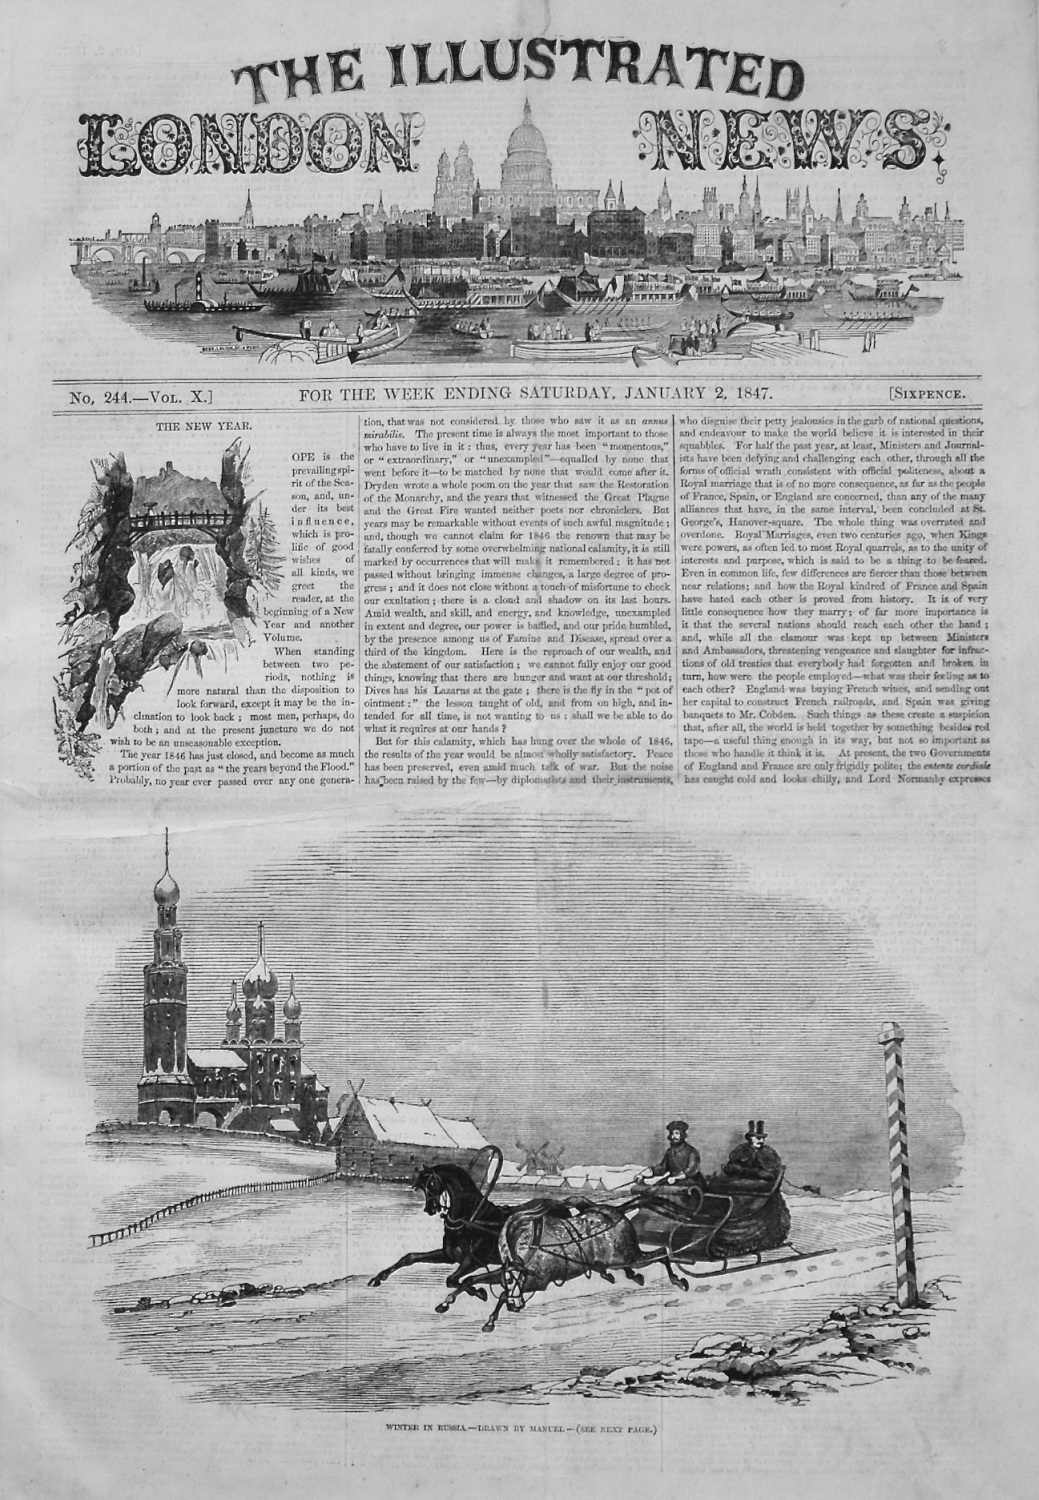 Illustrated London News. January 2nd, 1847.